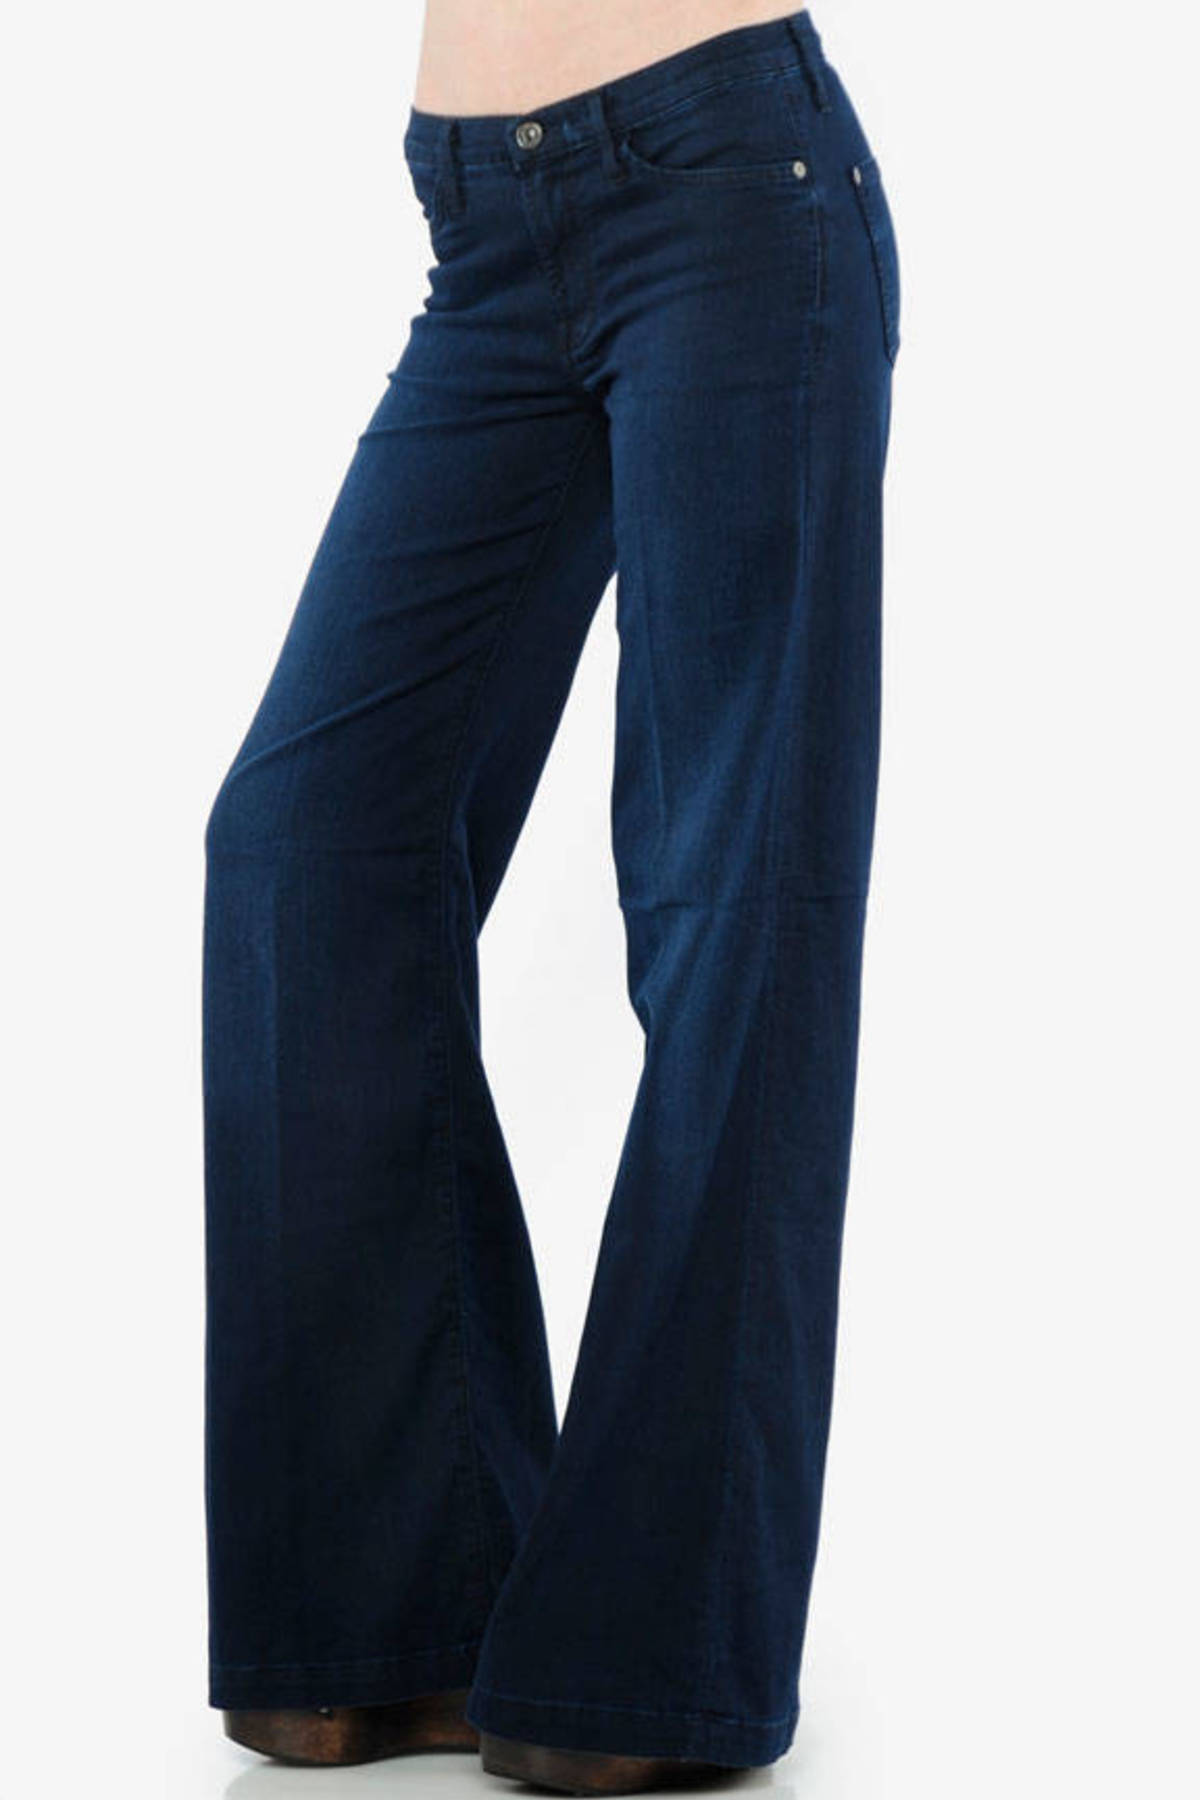 The Trouser Flare Leg Jeans in TBD Dark Featherweight - $50 | Tobi US